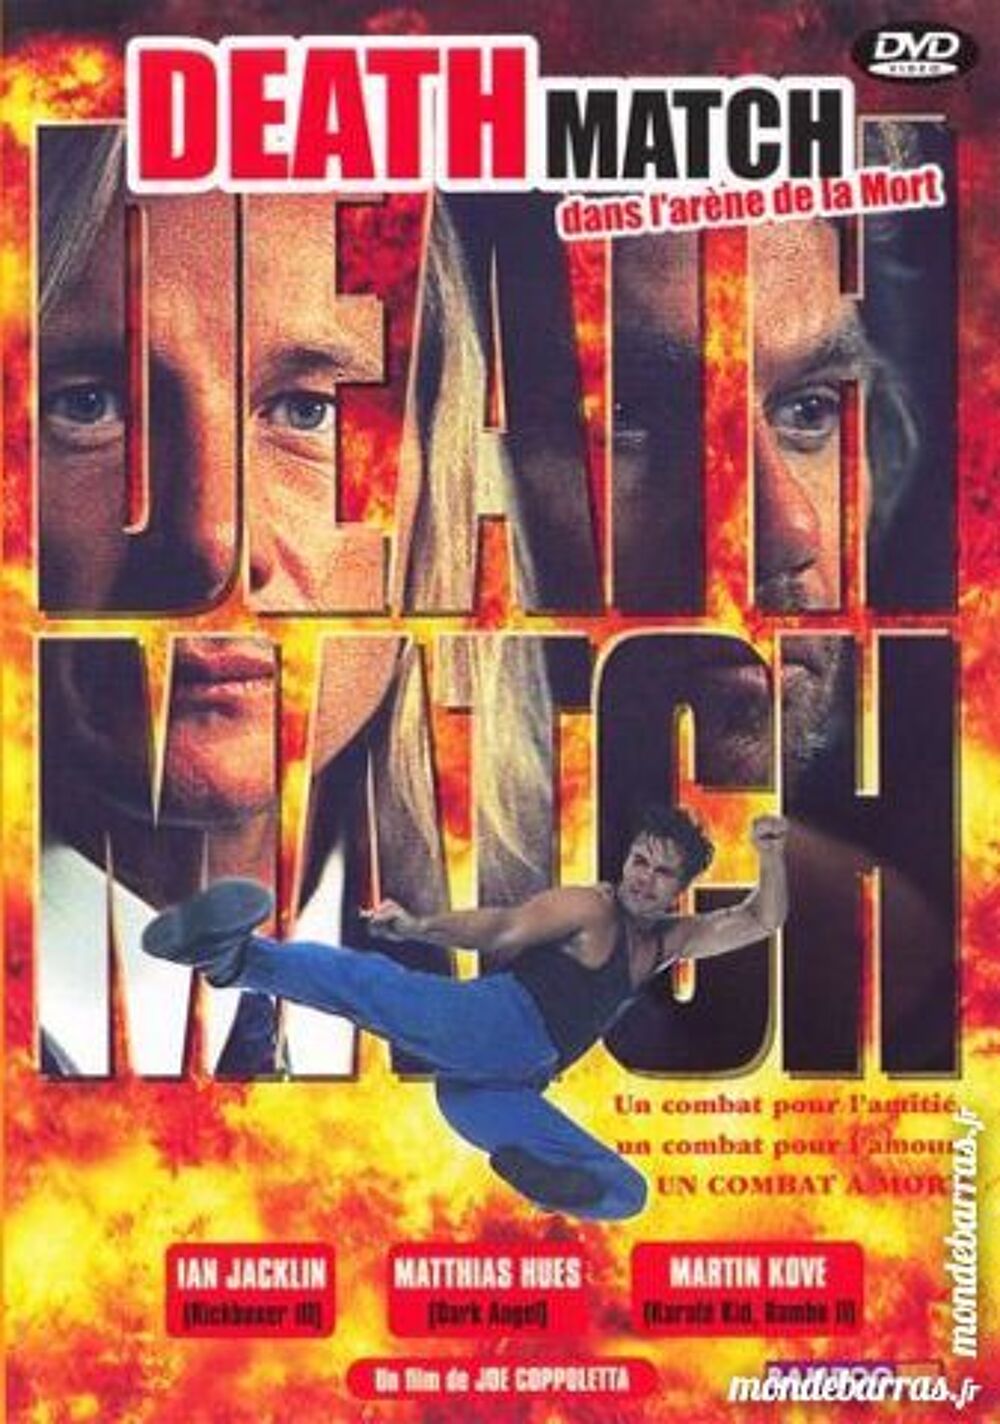 Dvd: Death match (516) DVD et blu-ray